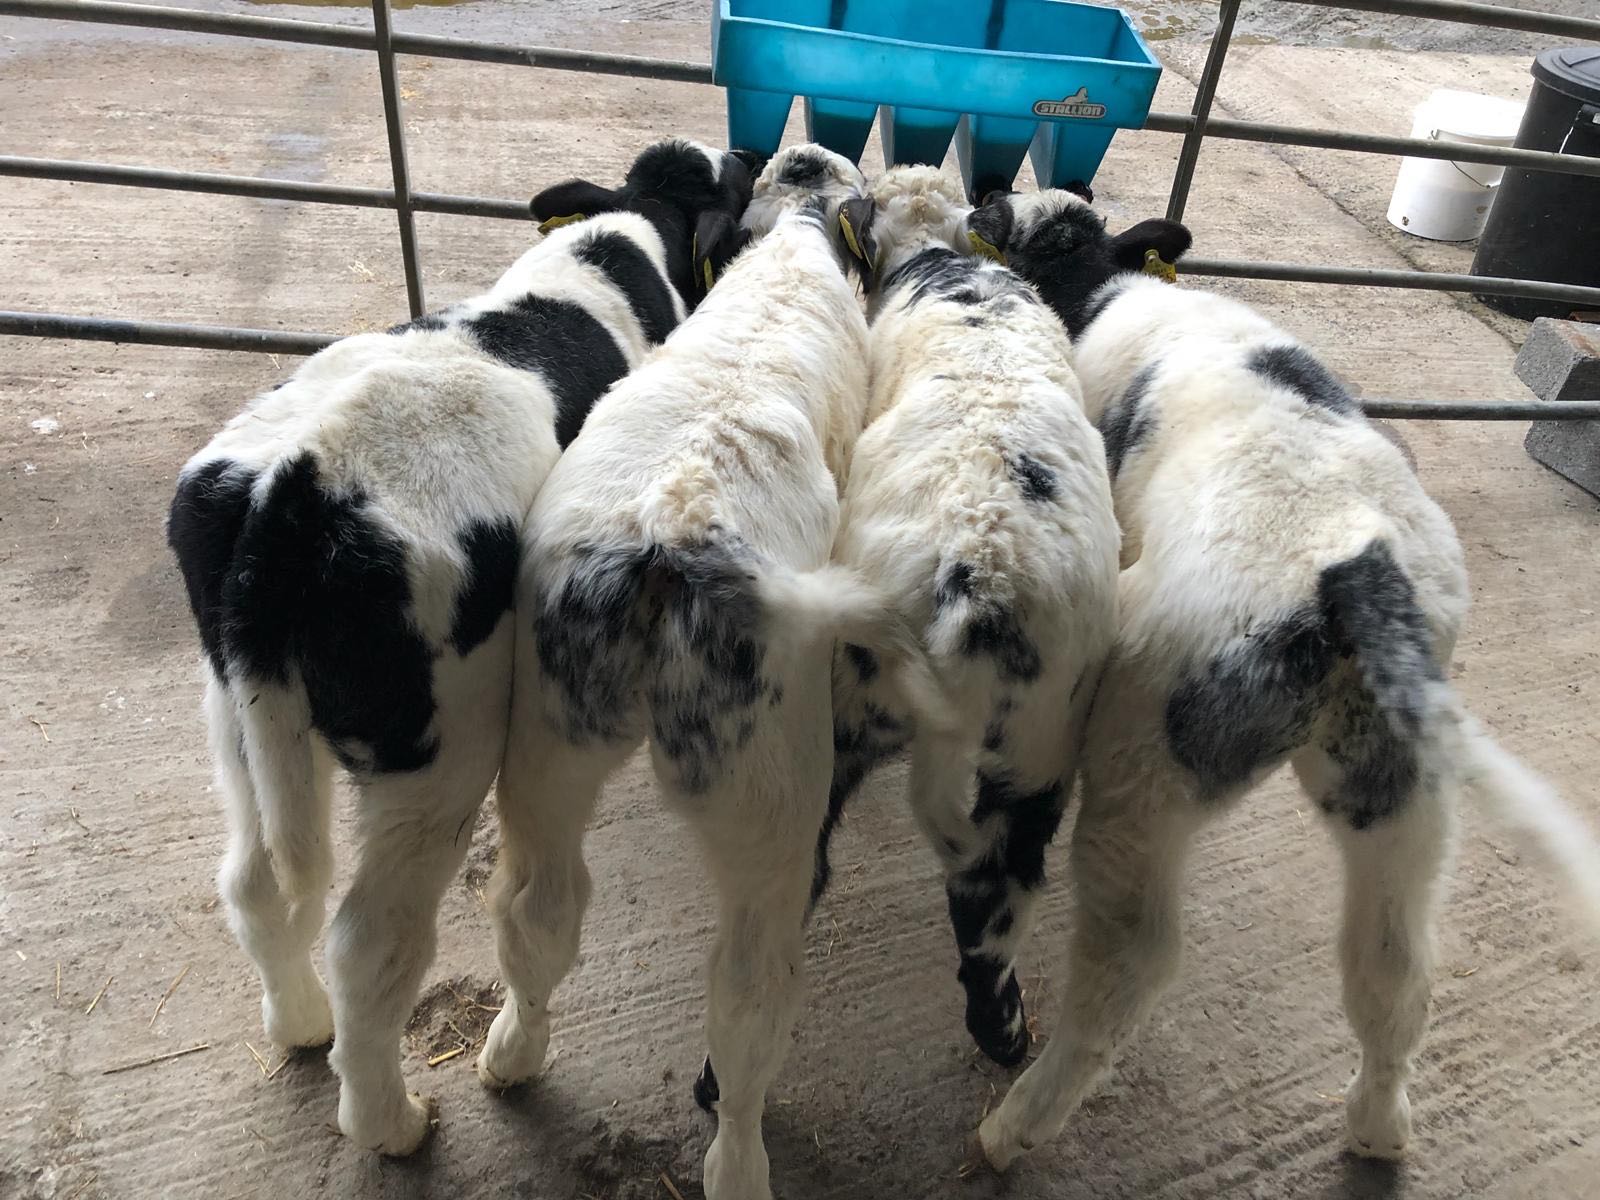 calves drinking from feeder